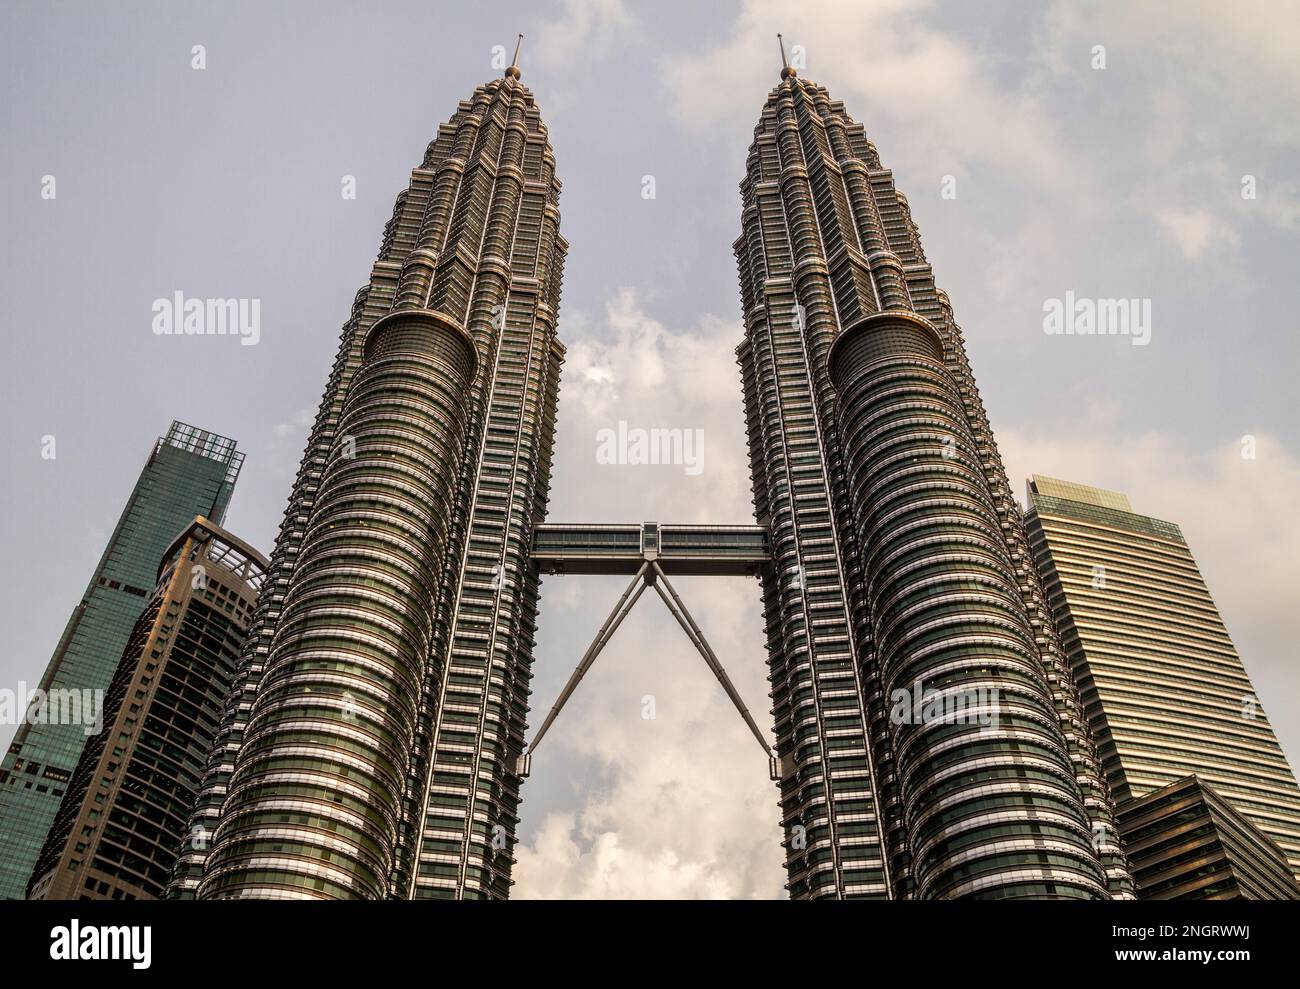 Petronas Towers, berühmte Zwillingshochhäuser in Kuala Lumpur, Malaysia. Stockfoto